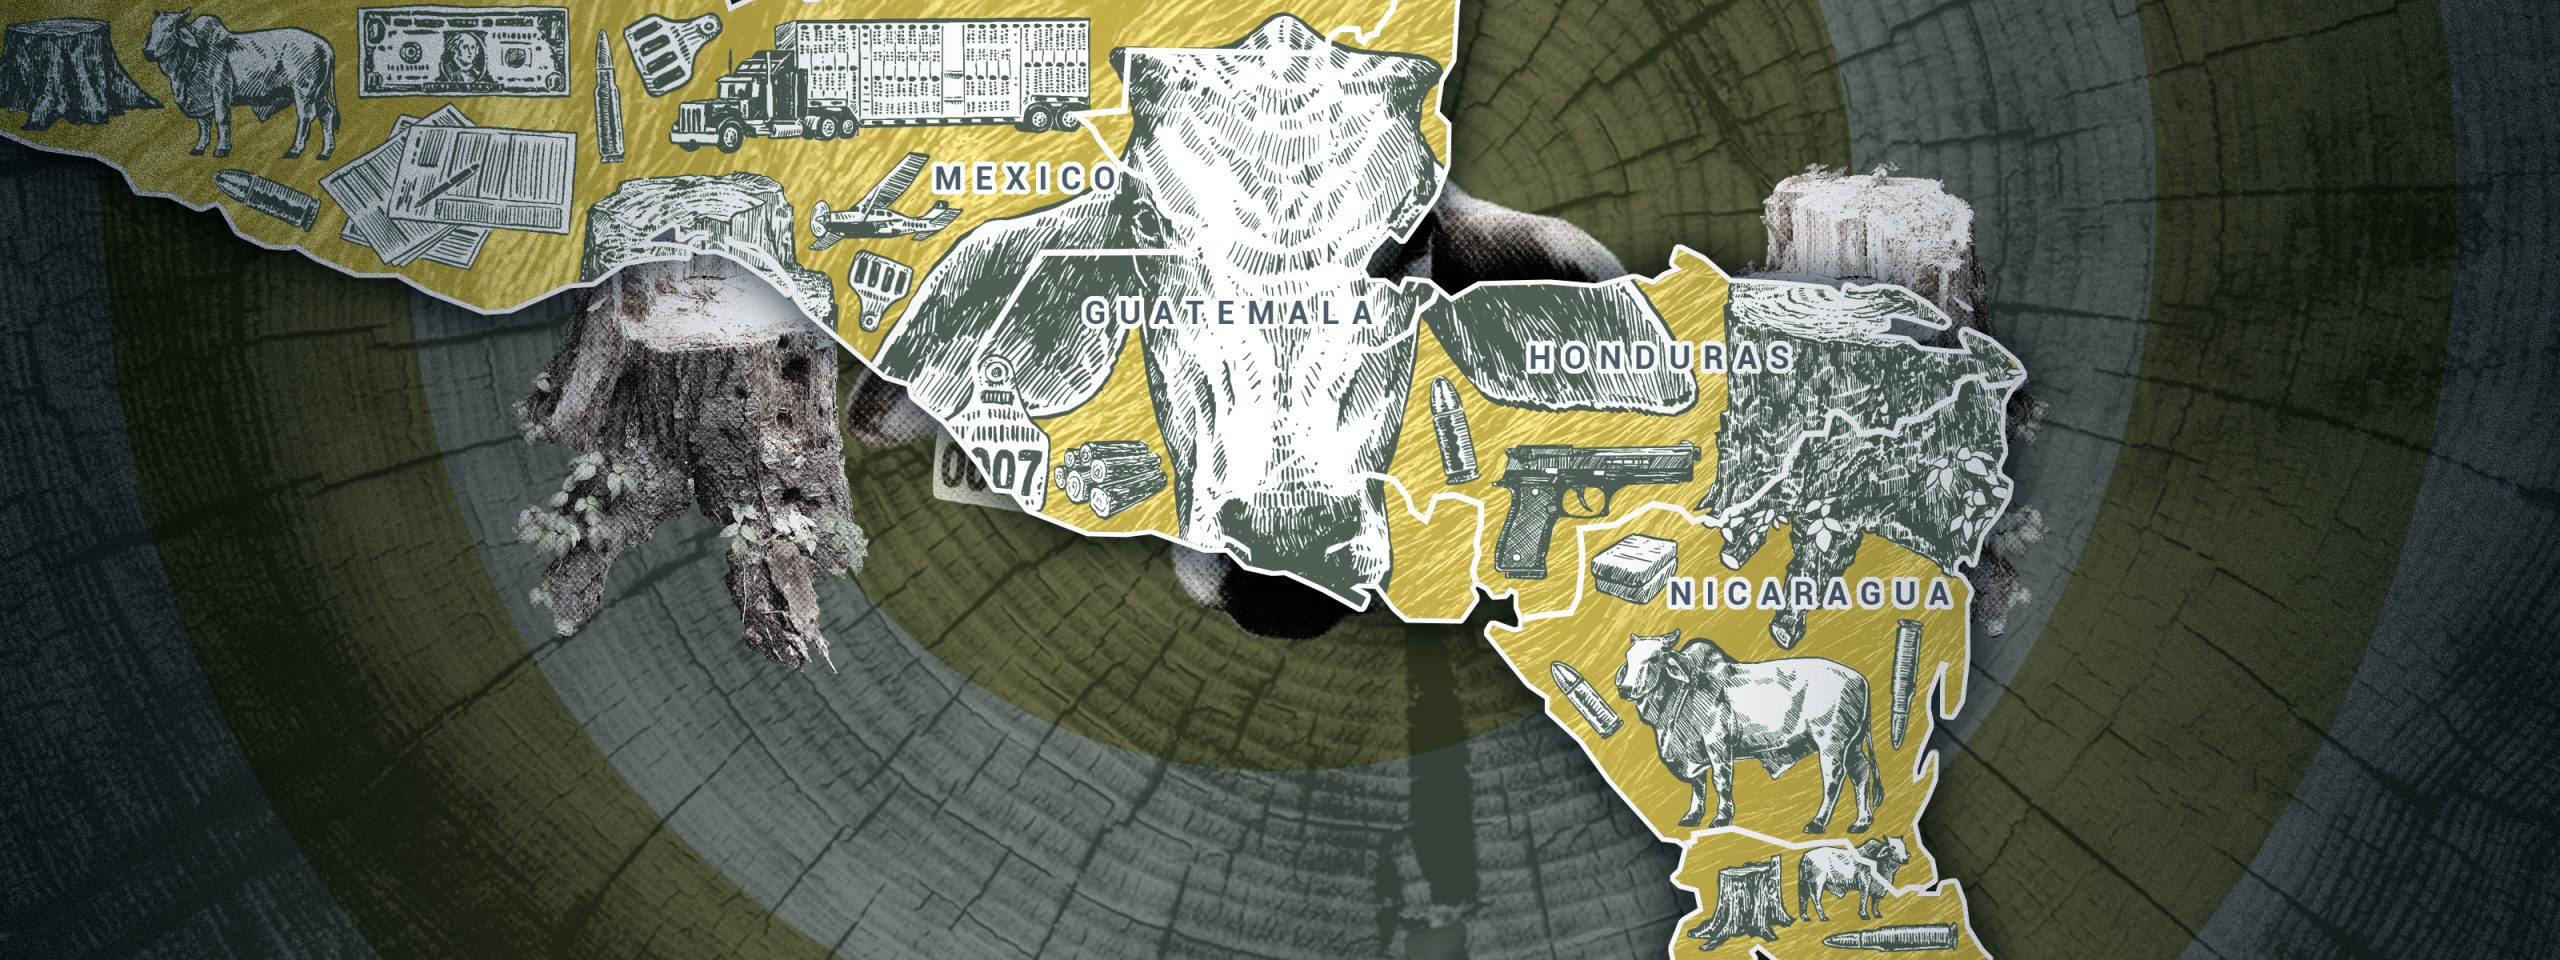 Cattle-environmetal crime-mexico-nicaragua-guatemala-honduras-illustration-cow-corruption